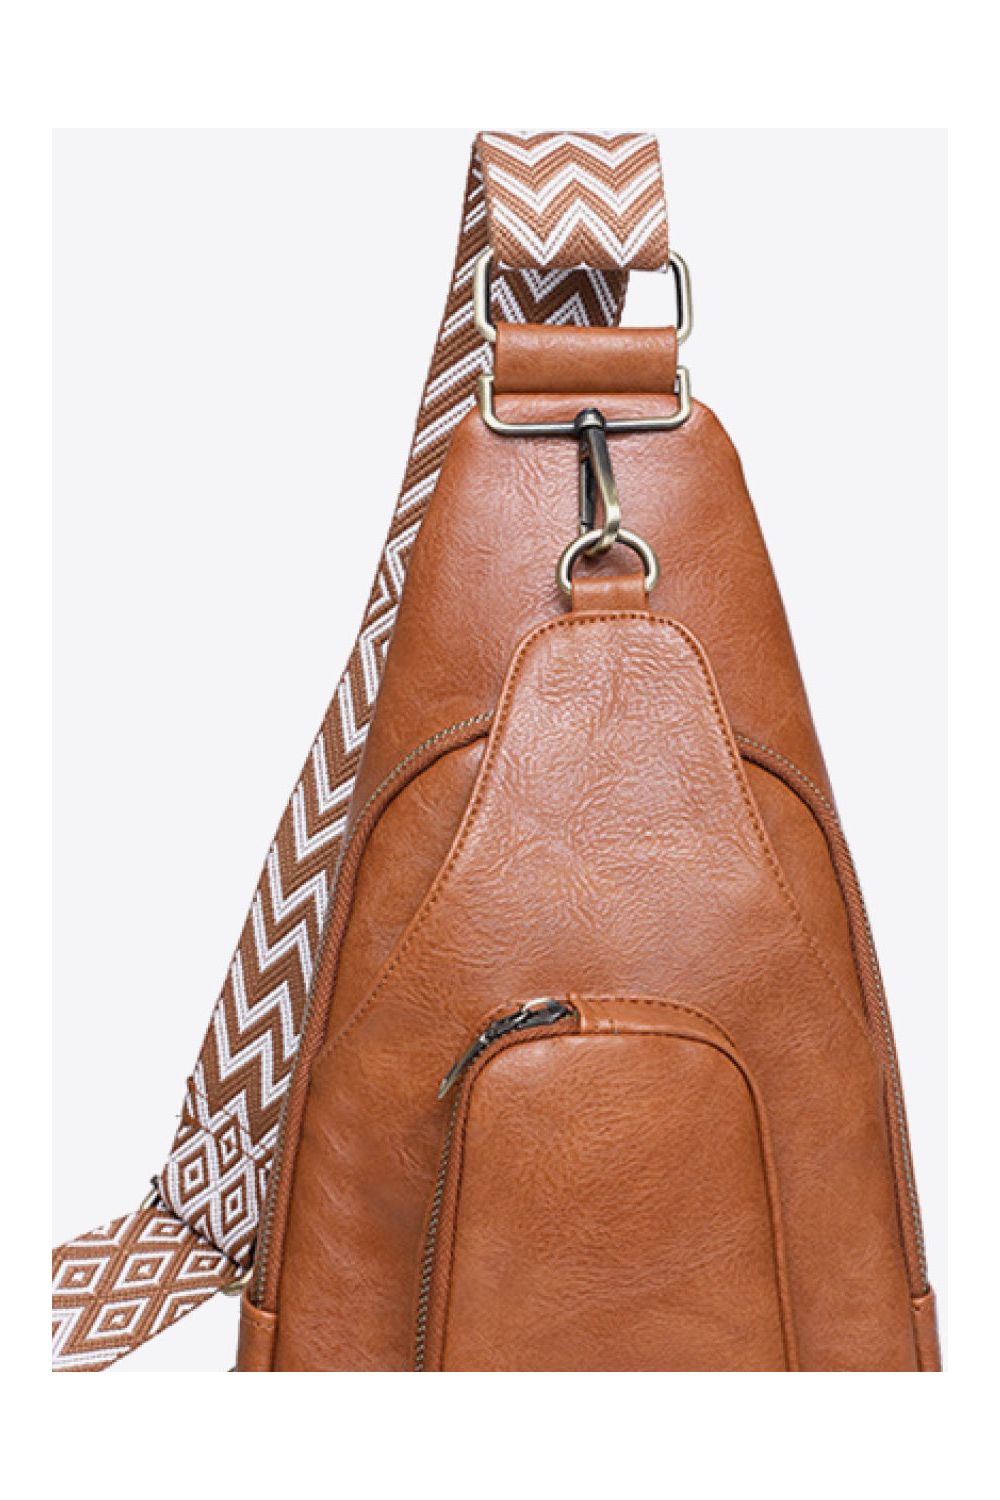 Women Adored Take A Trip PU Leather Ochre Colored Sling Bag - NicholesGifts.online